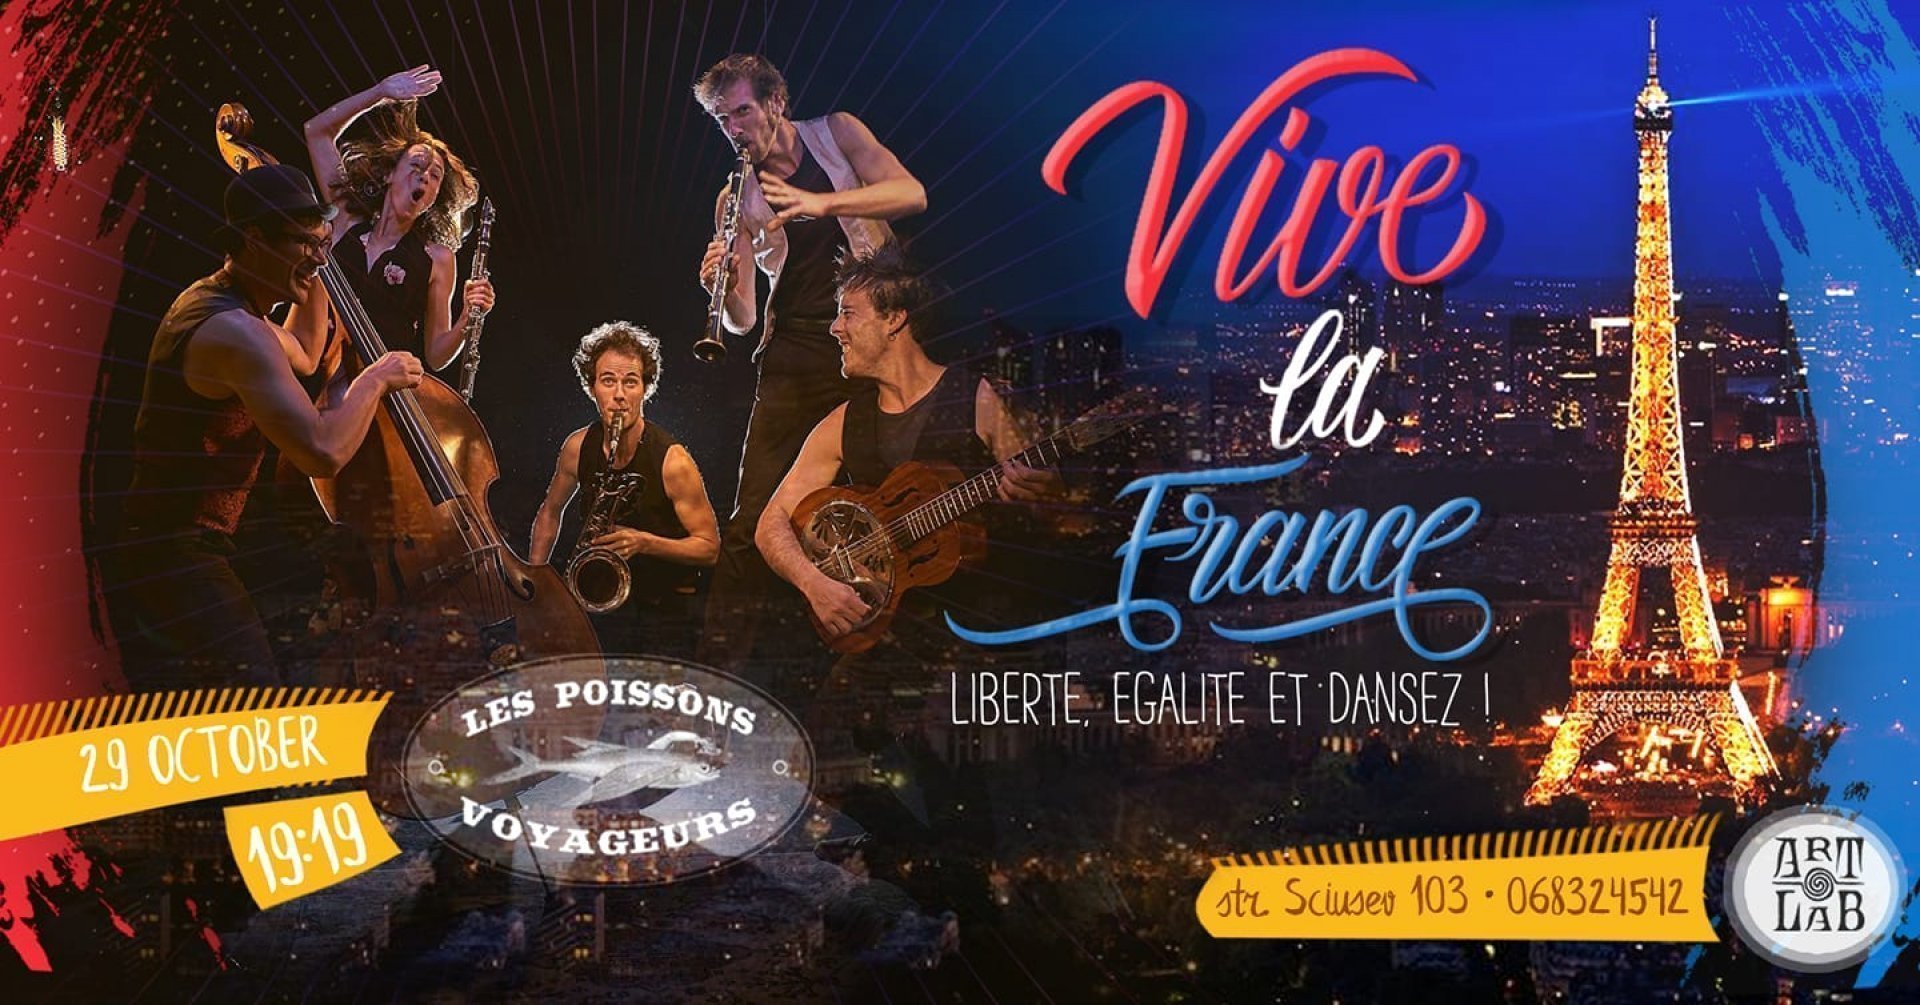 Le Poissons Voyageurs - ethno-jazz, balkanic, folk show